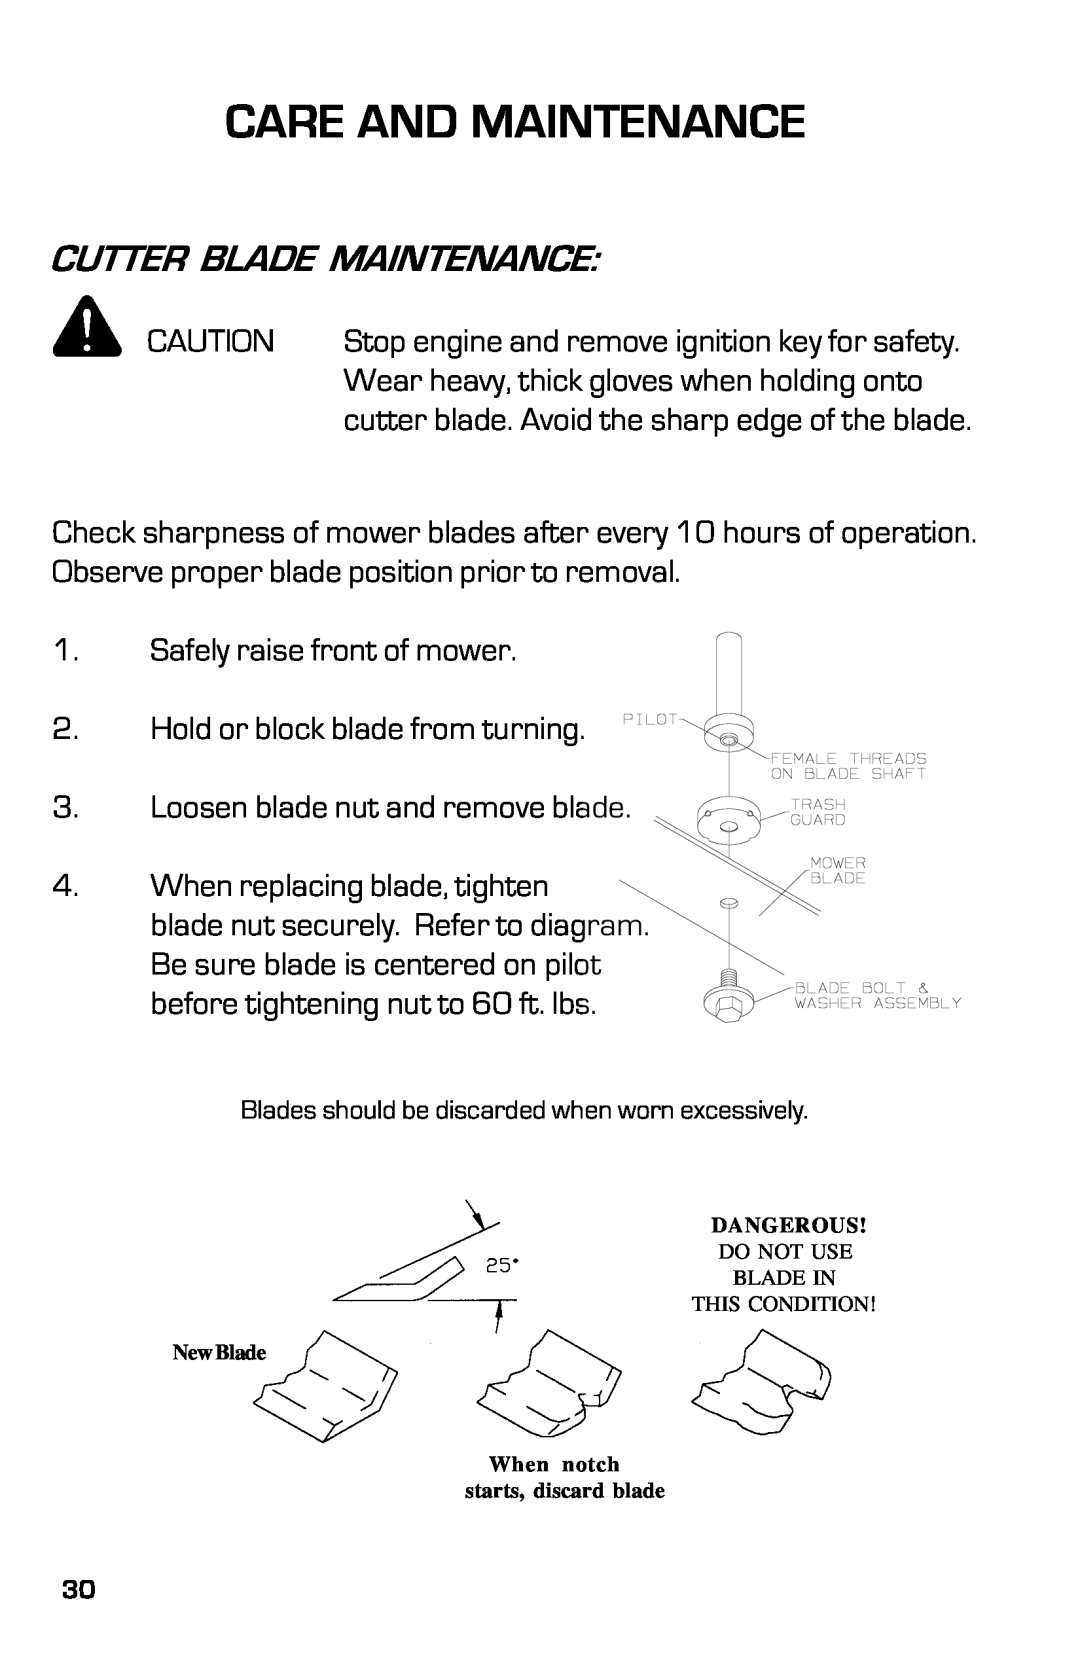 Dixon 2003, 13639-0702 manual Care And Maintenance, Cutter Blade Maintenance 